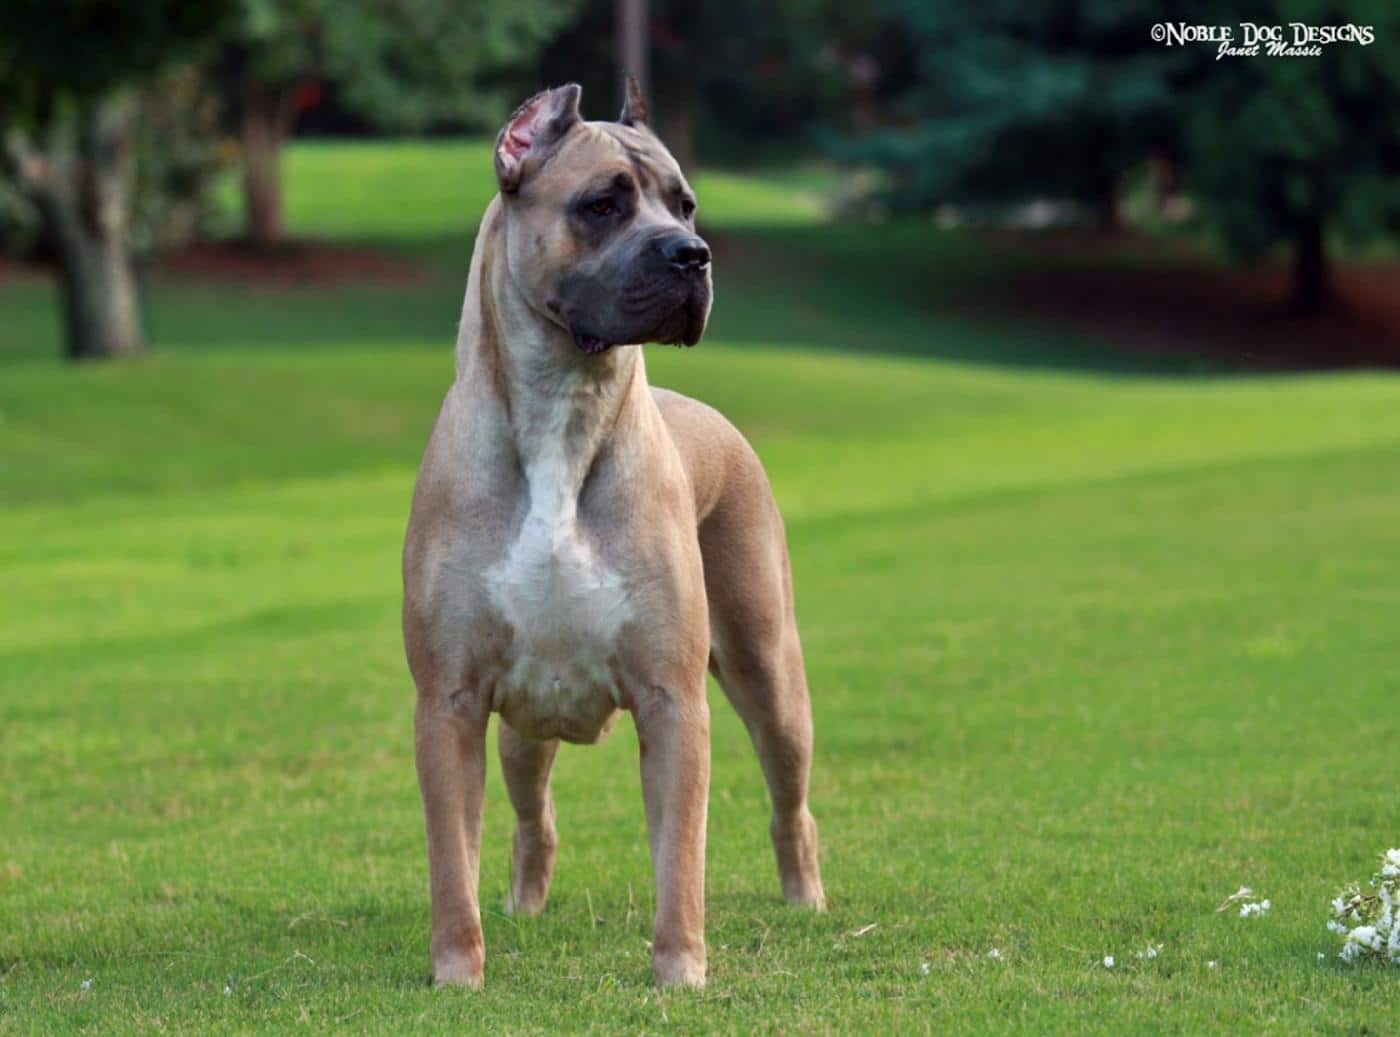 Cane Corso dog standing on grass photo